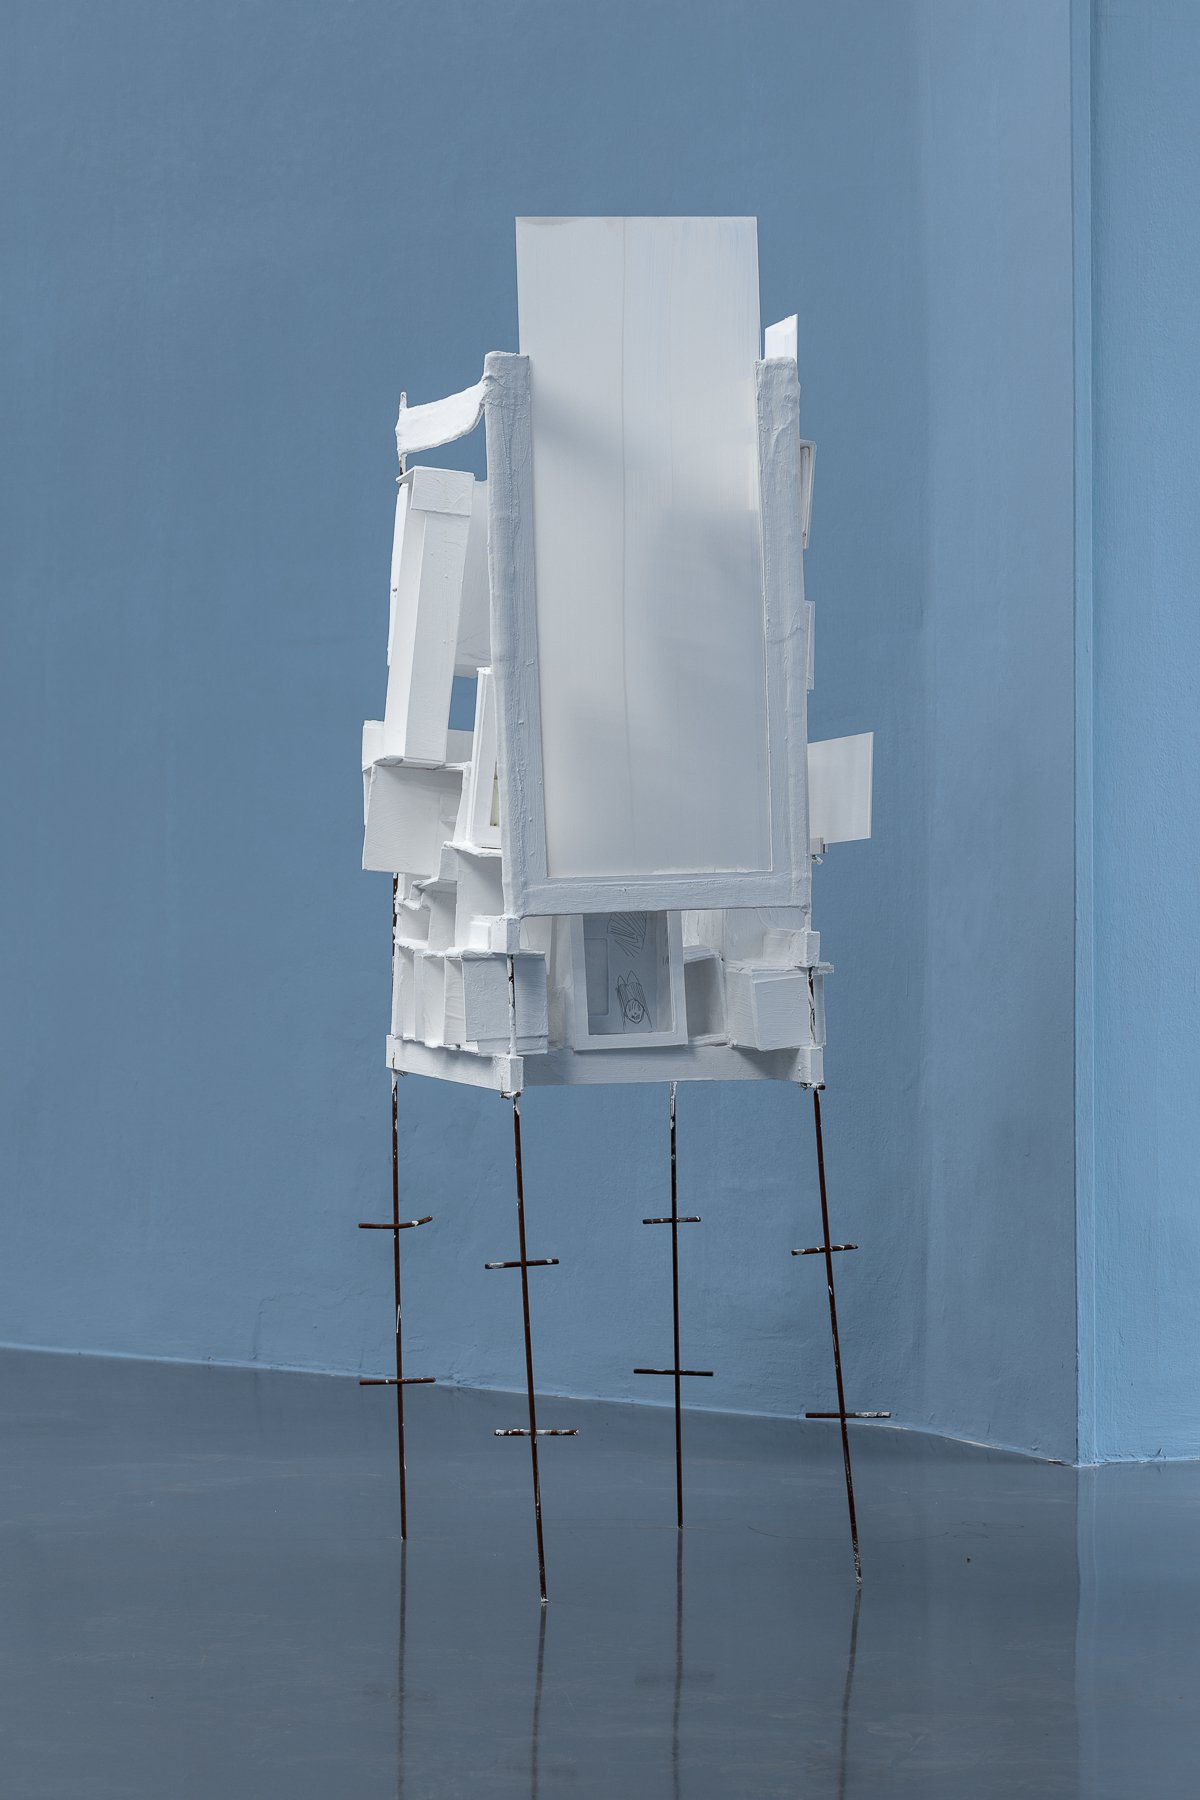 Tillman KaiserBoxoffice, 2020Cardboard, glass, metal, dispersion paint, oil paint136 x 63 x 55 cm